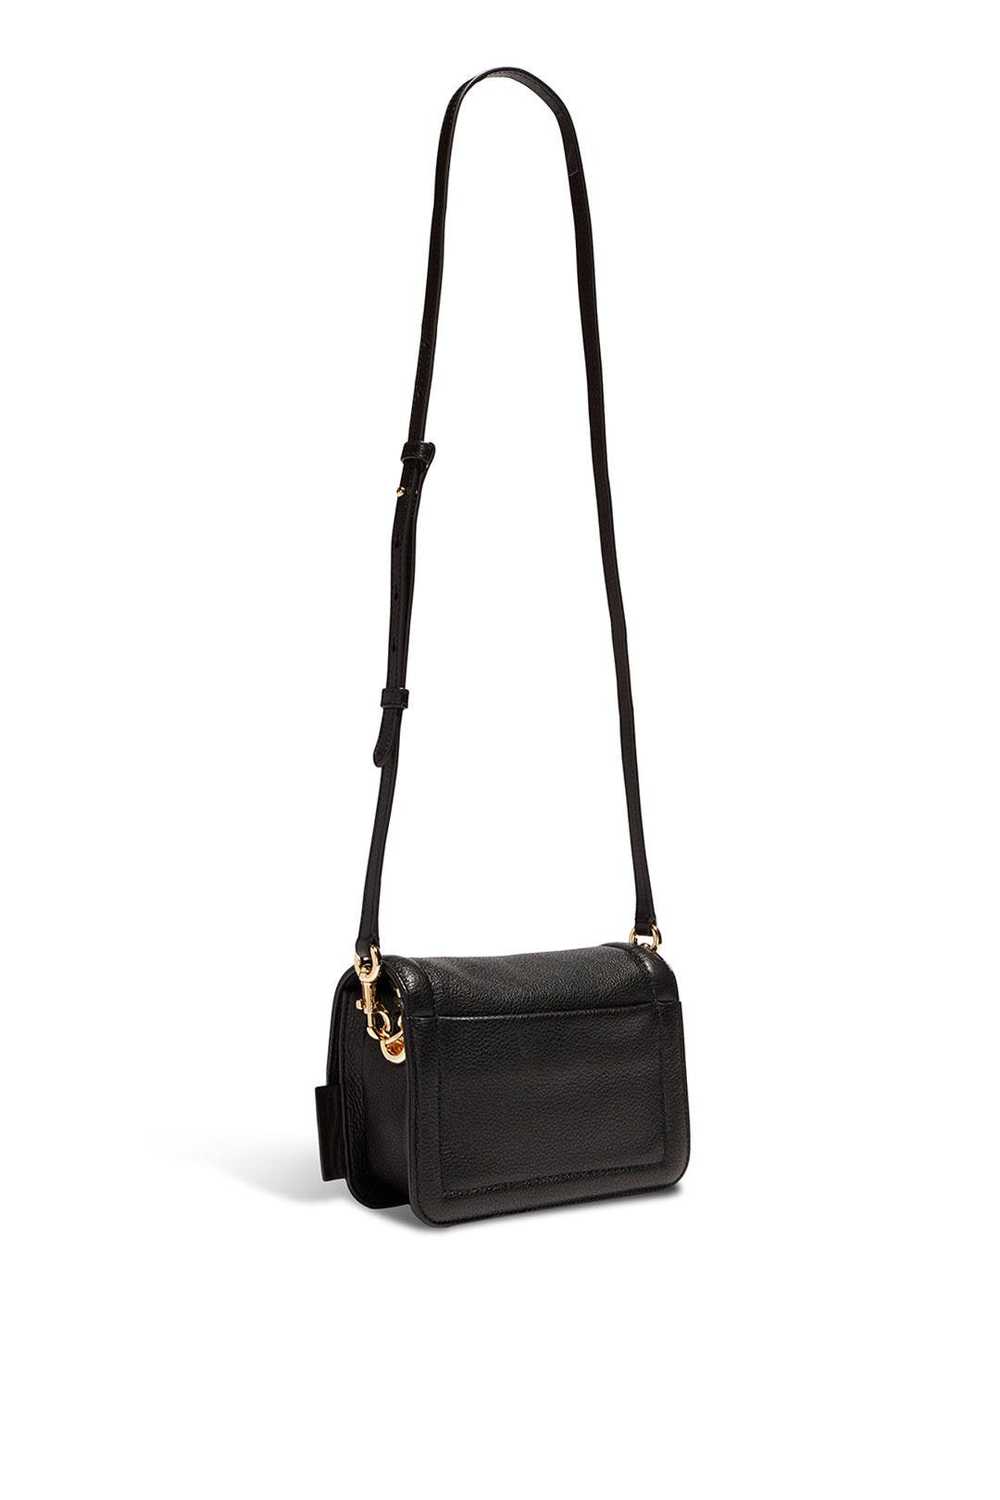 Marc Jacobs Handbags The Mini Cushion Bag - image 3